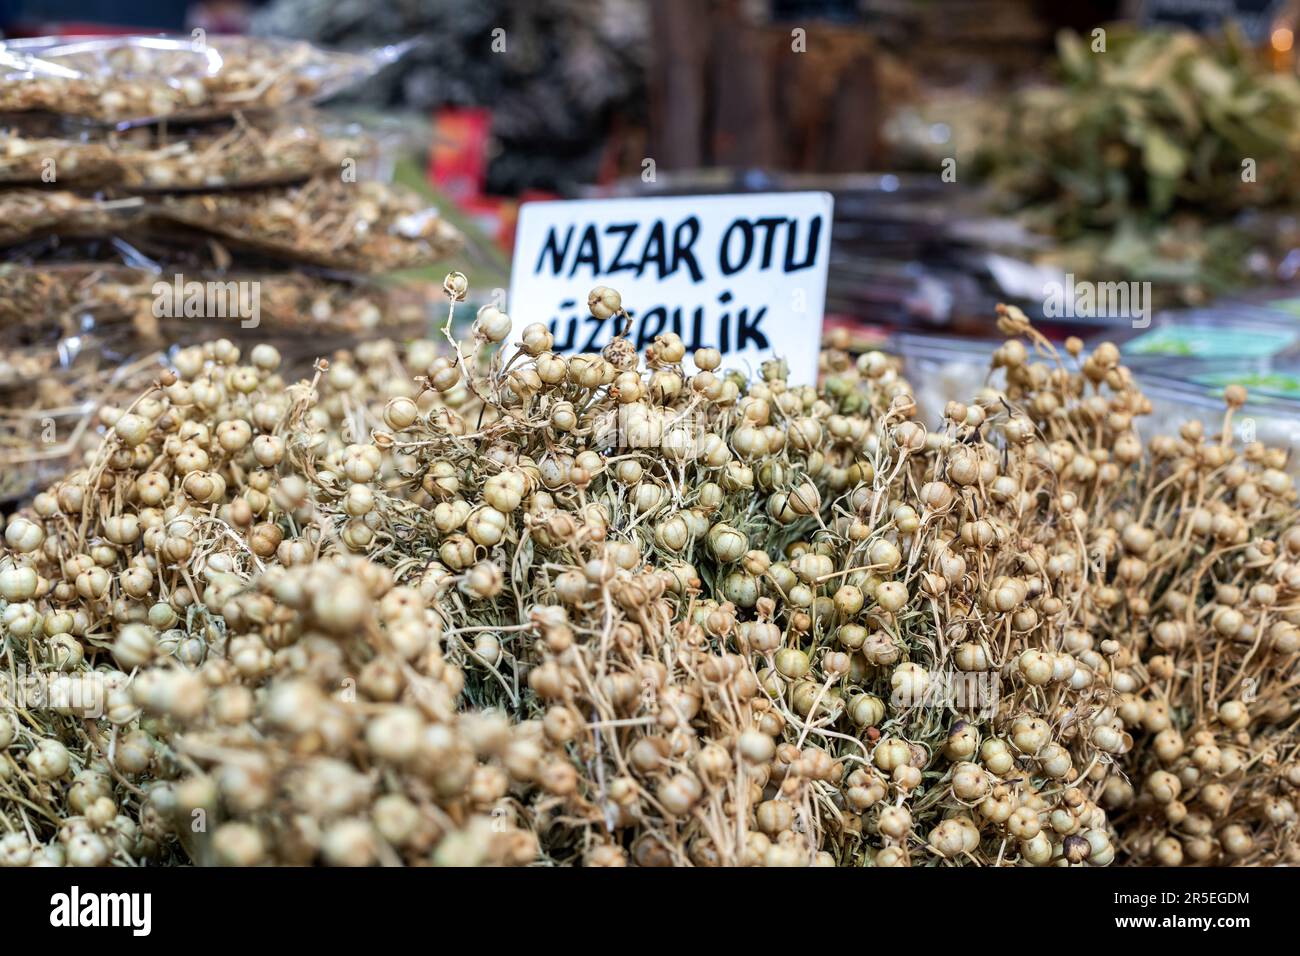 Dried Peganum harmala (uzerlik). Close-up of Peganum harmala in a local street market. Stock Photo